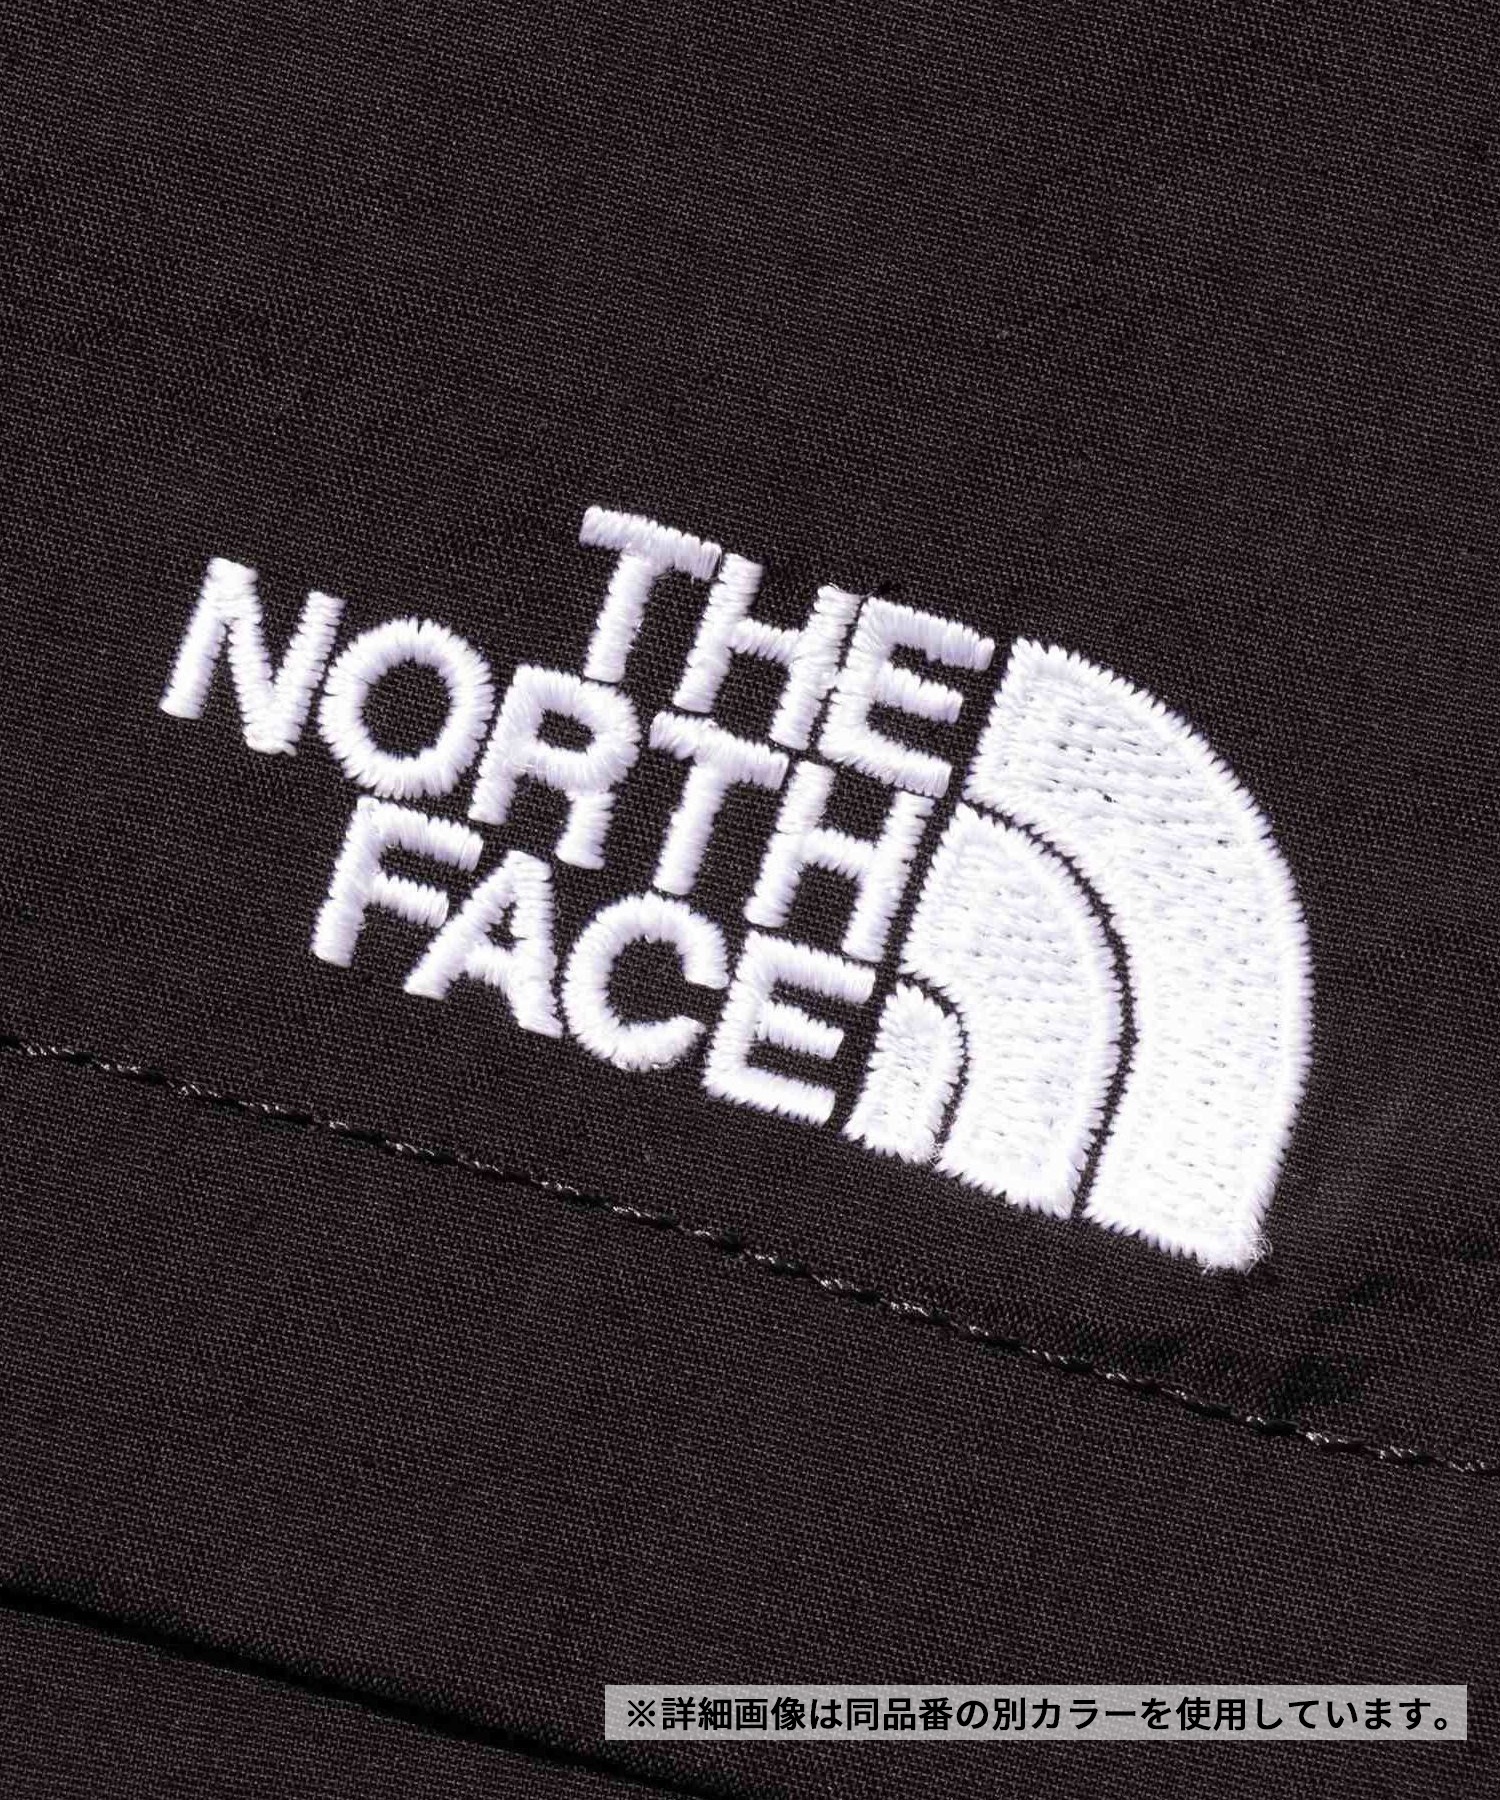 THE NORTH FACE ザ・ノース・フェイス メンズ バーサタイルショーツ ハーフパンツ 撥水 UVカット NB42335 GA(GA-S)